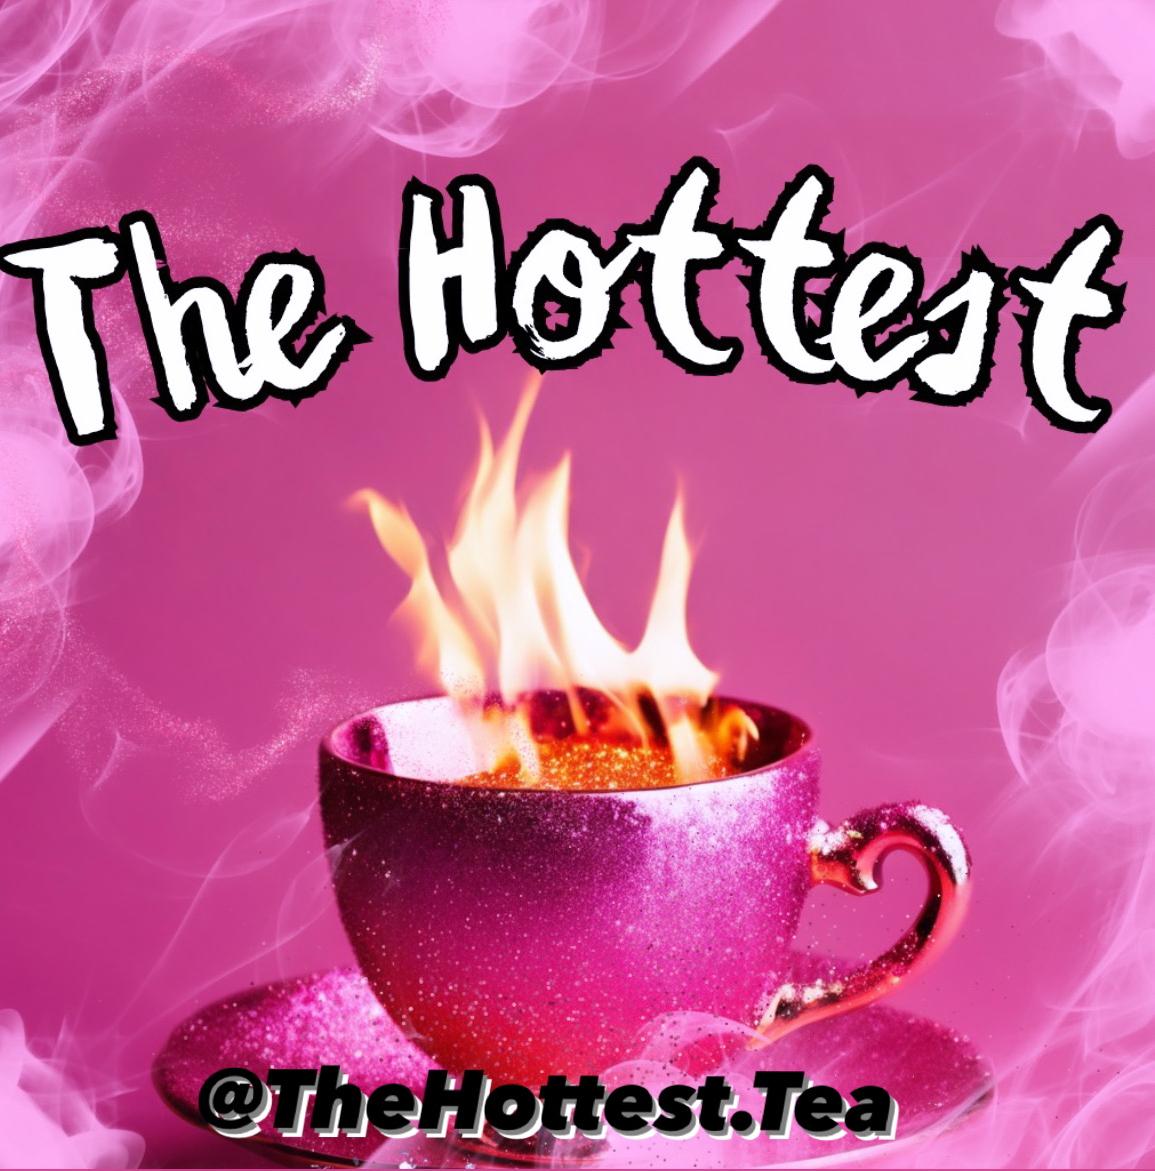 The Hottest tea